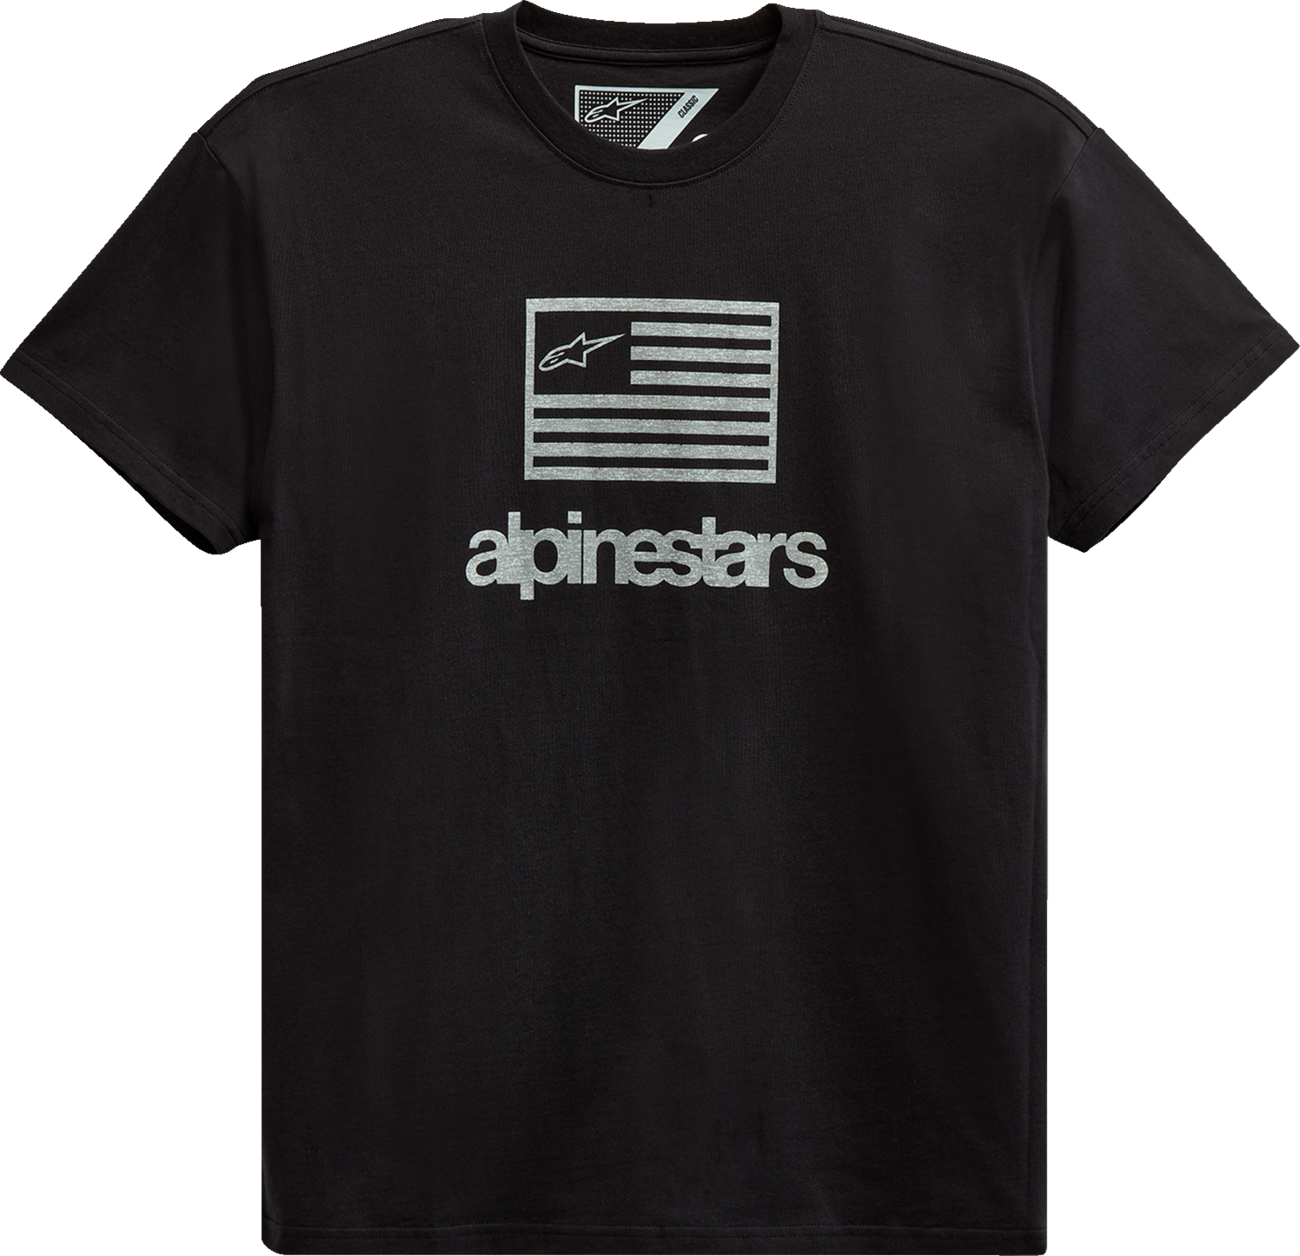 ALPINESTARS Flag T-Shirt - Black - Large 12137262010L